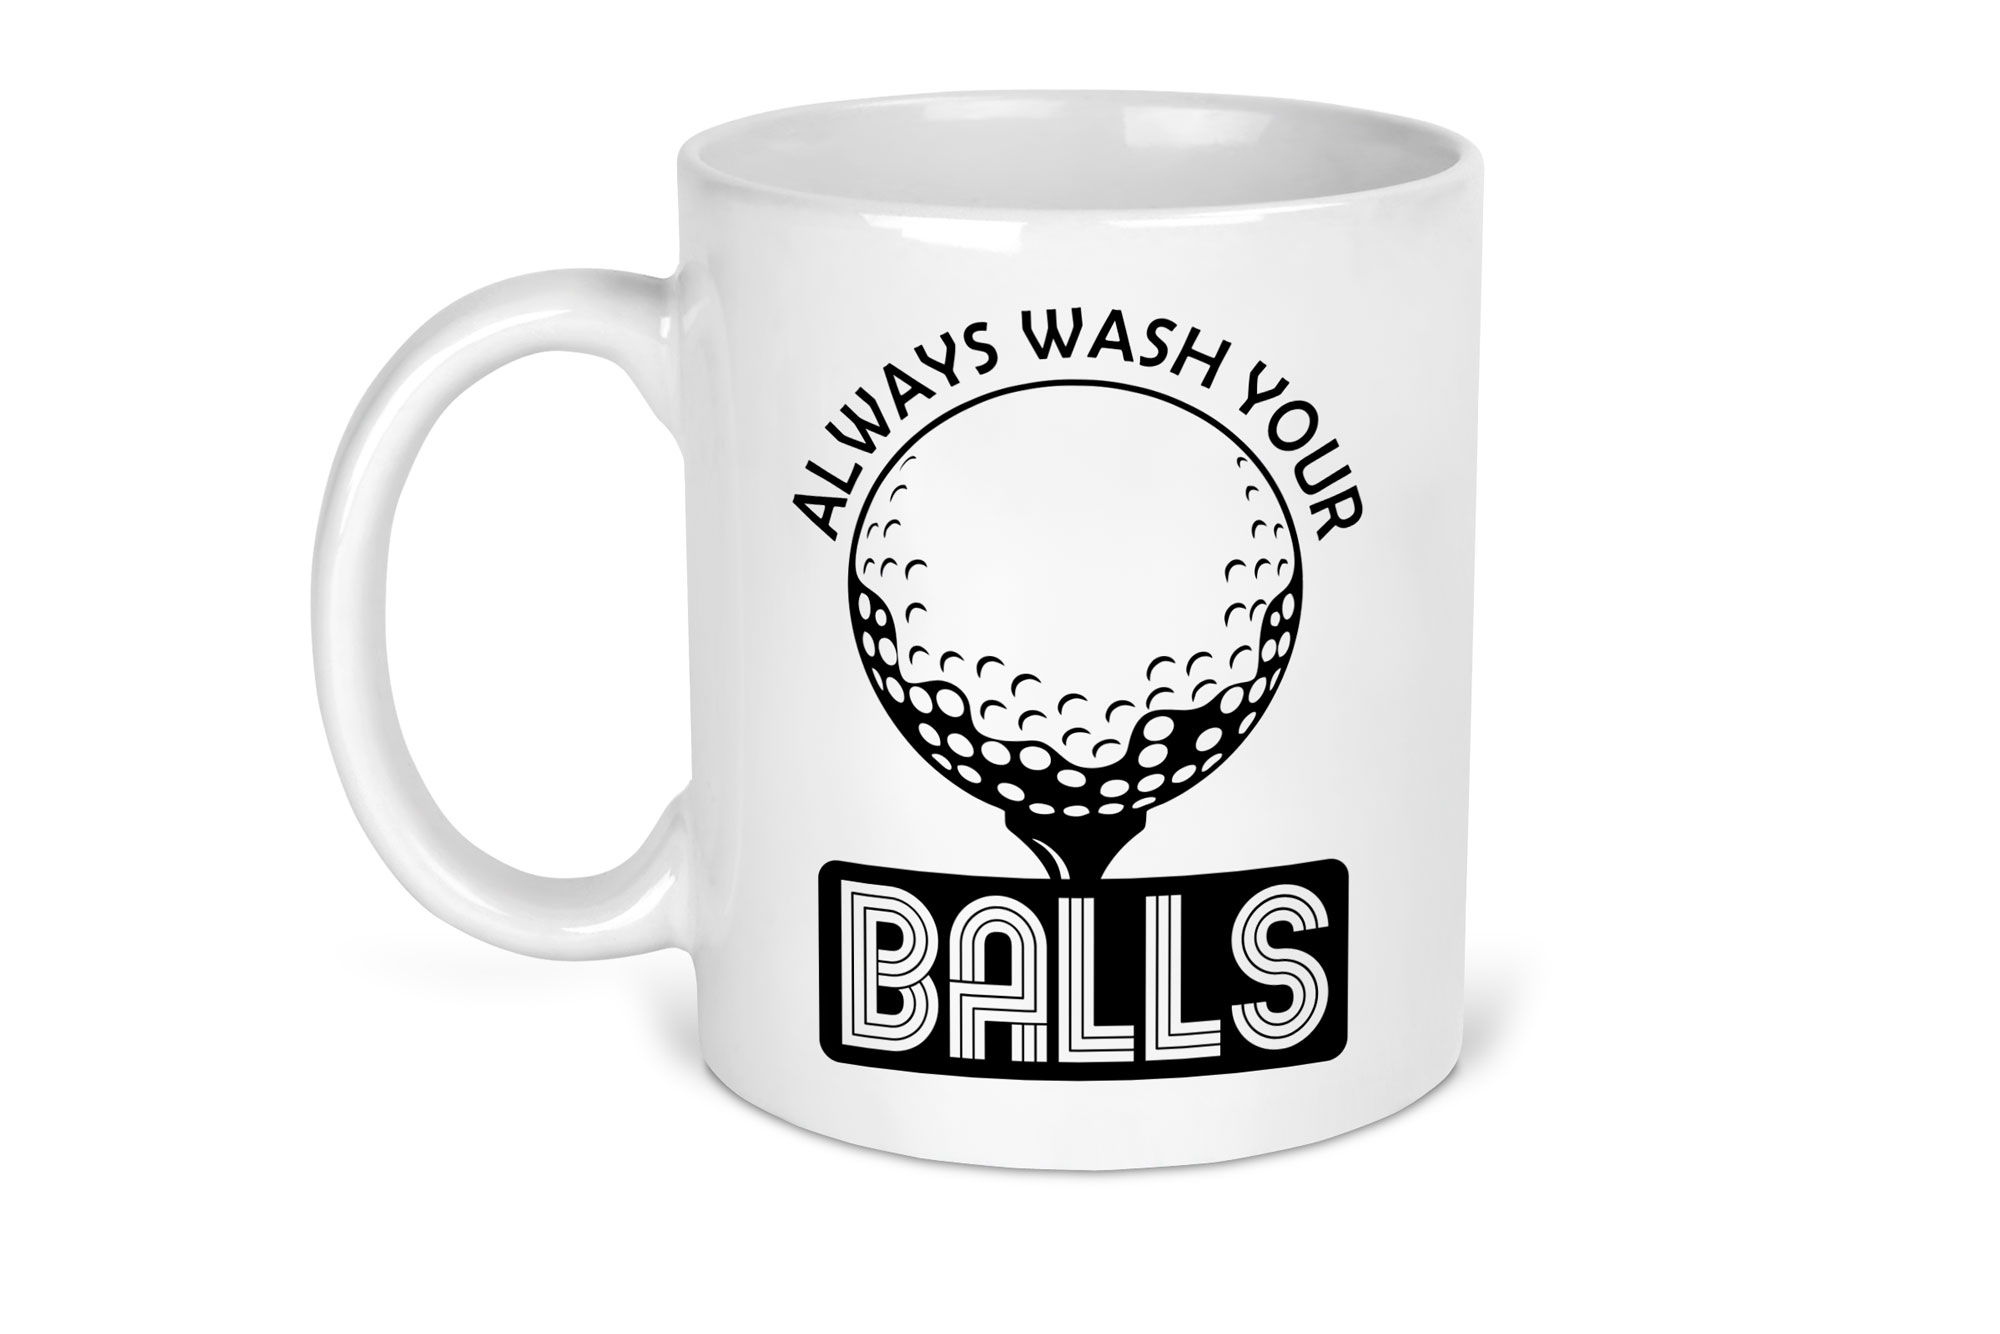 always wash your balls golf design mug gift